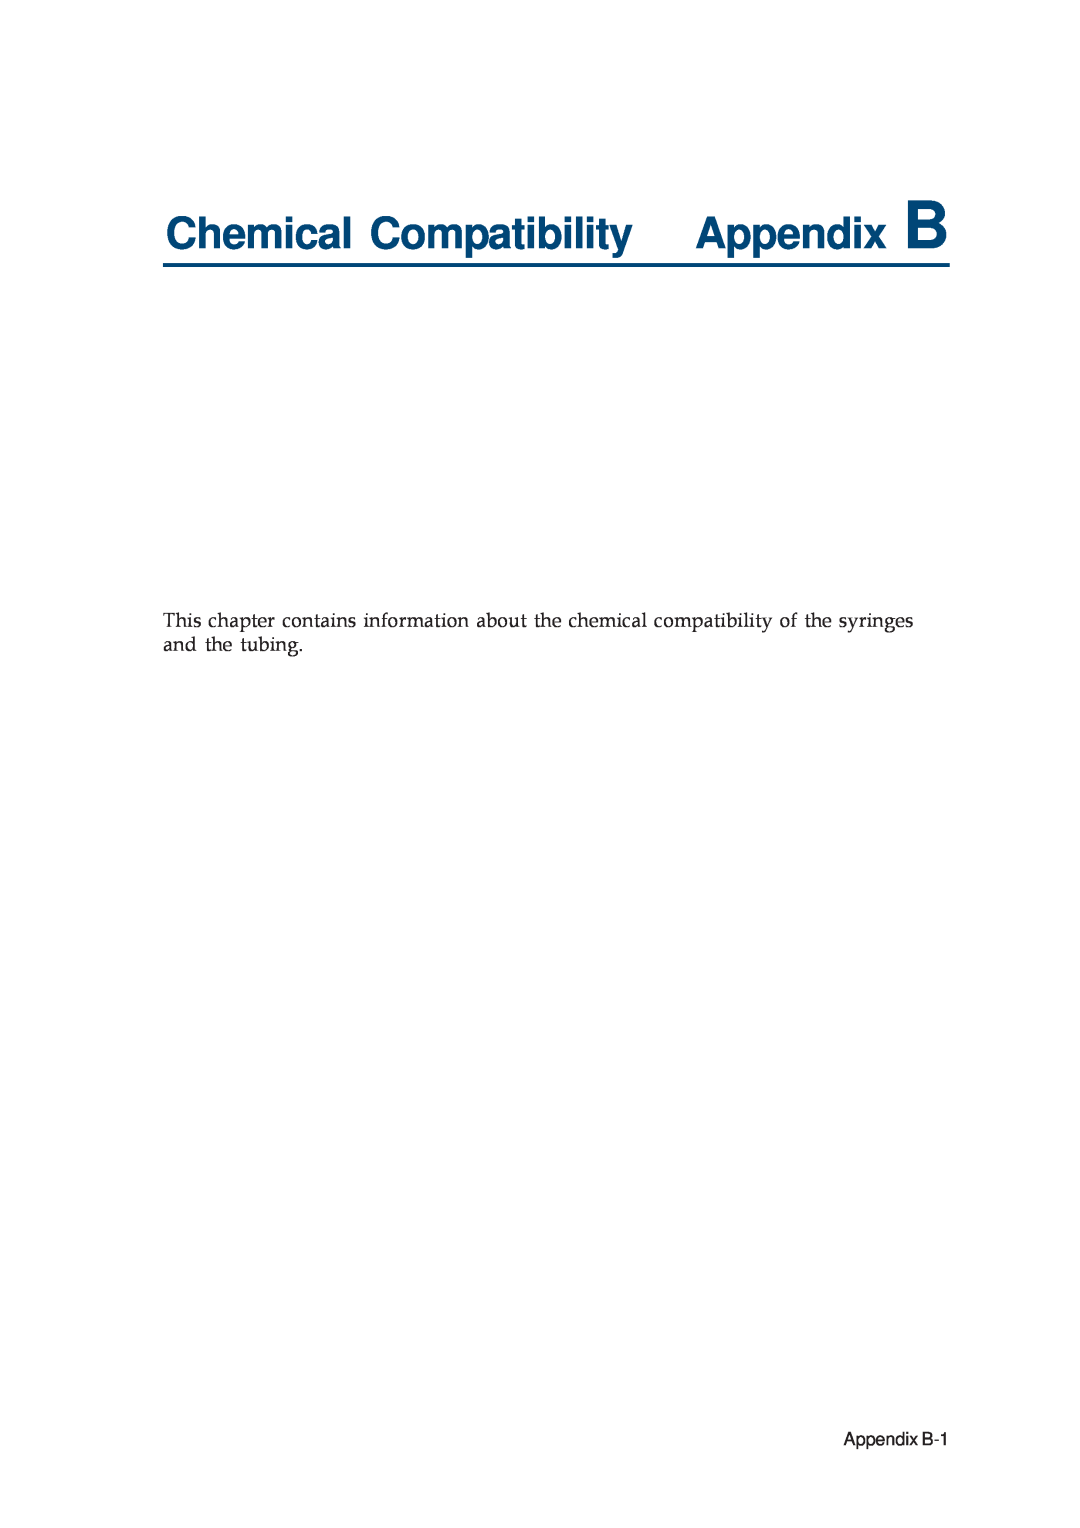 Gilson 402 manual Chemical Compatibility Appendix B, Appendix B-1 